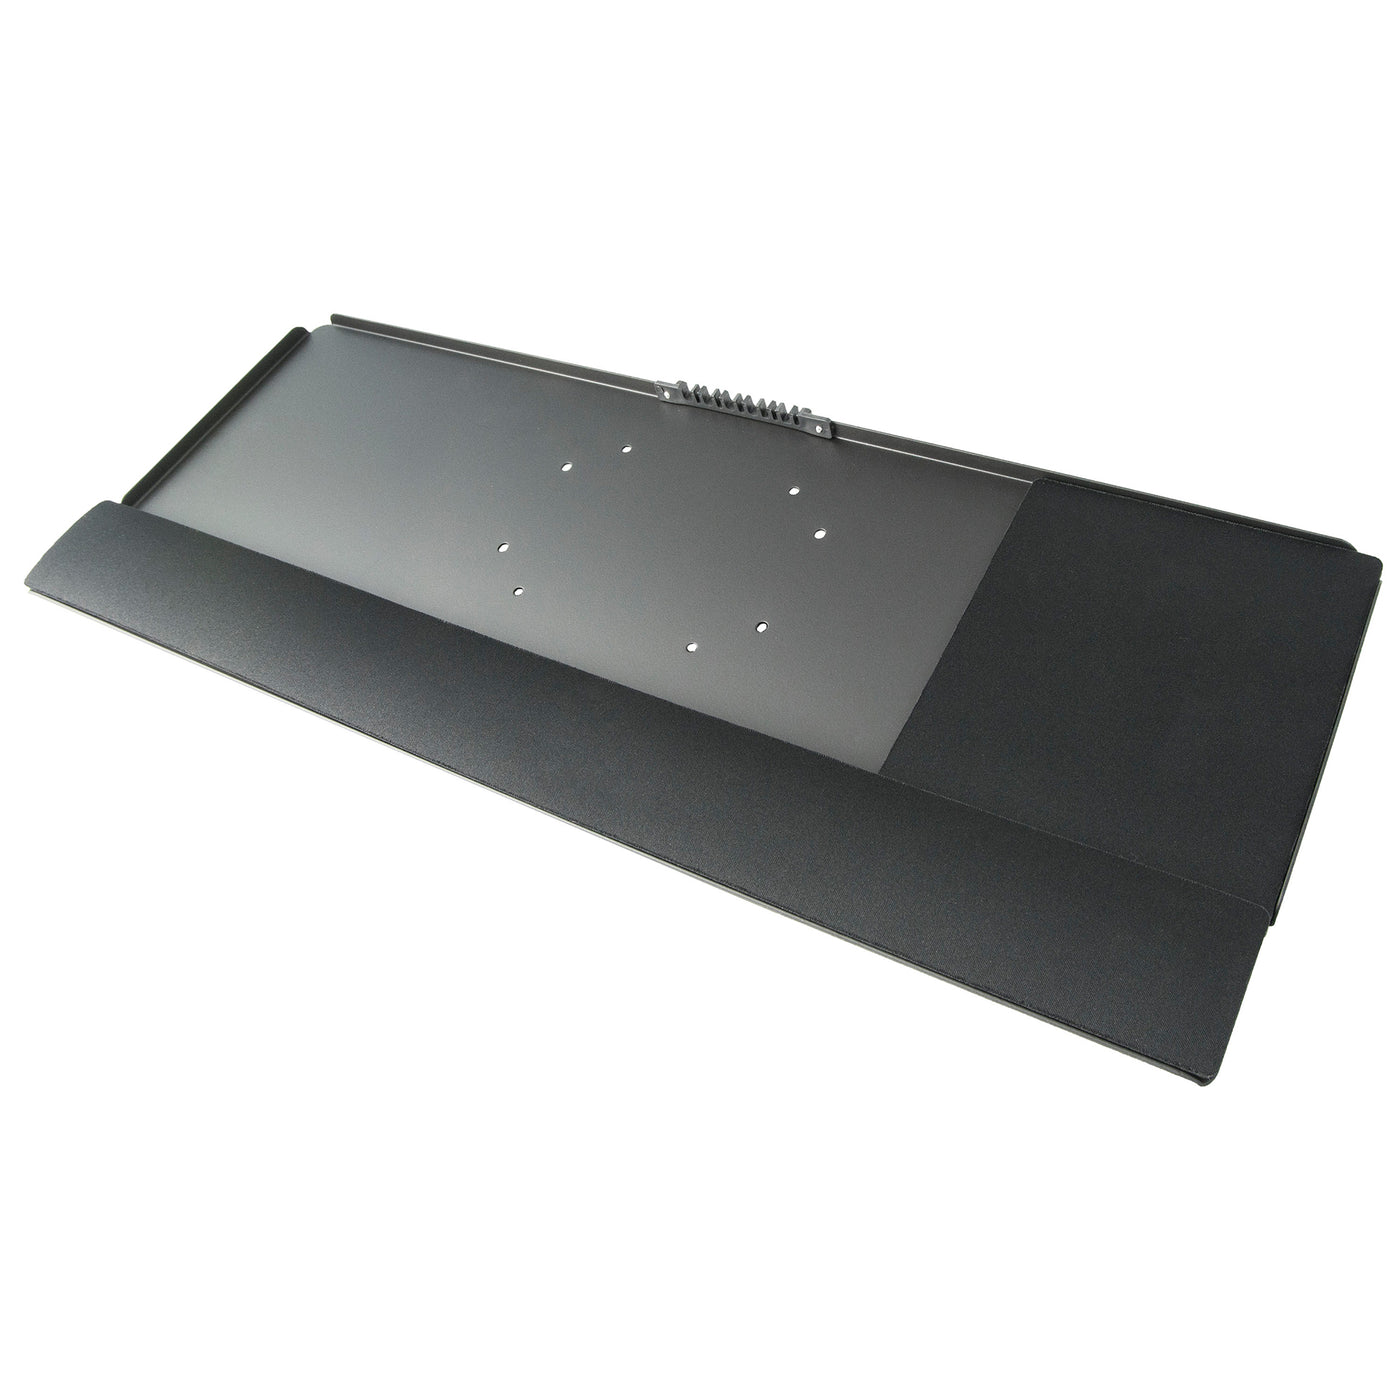 Sturdy keyboard tray holder from VIVO.